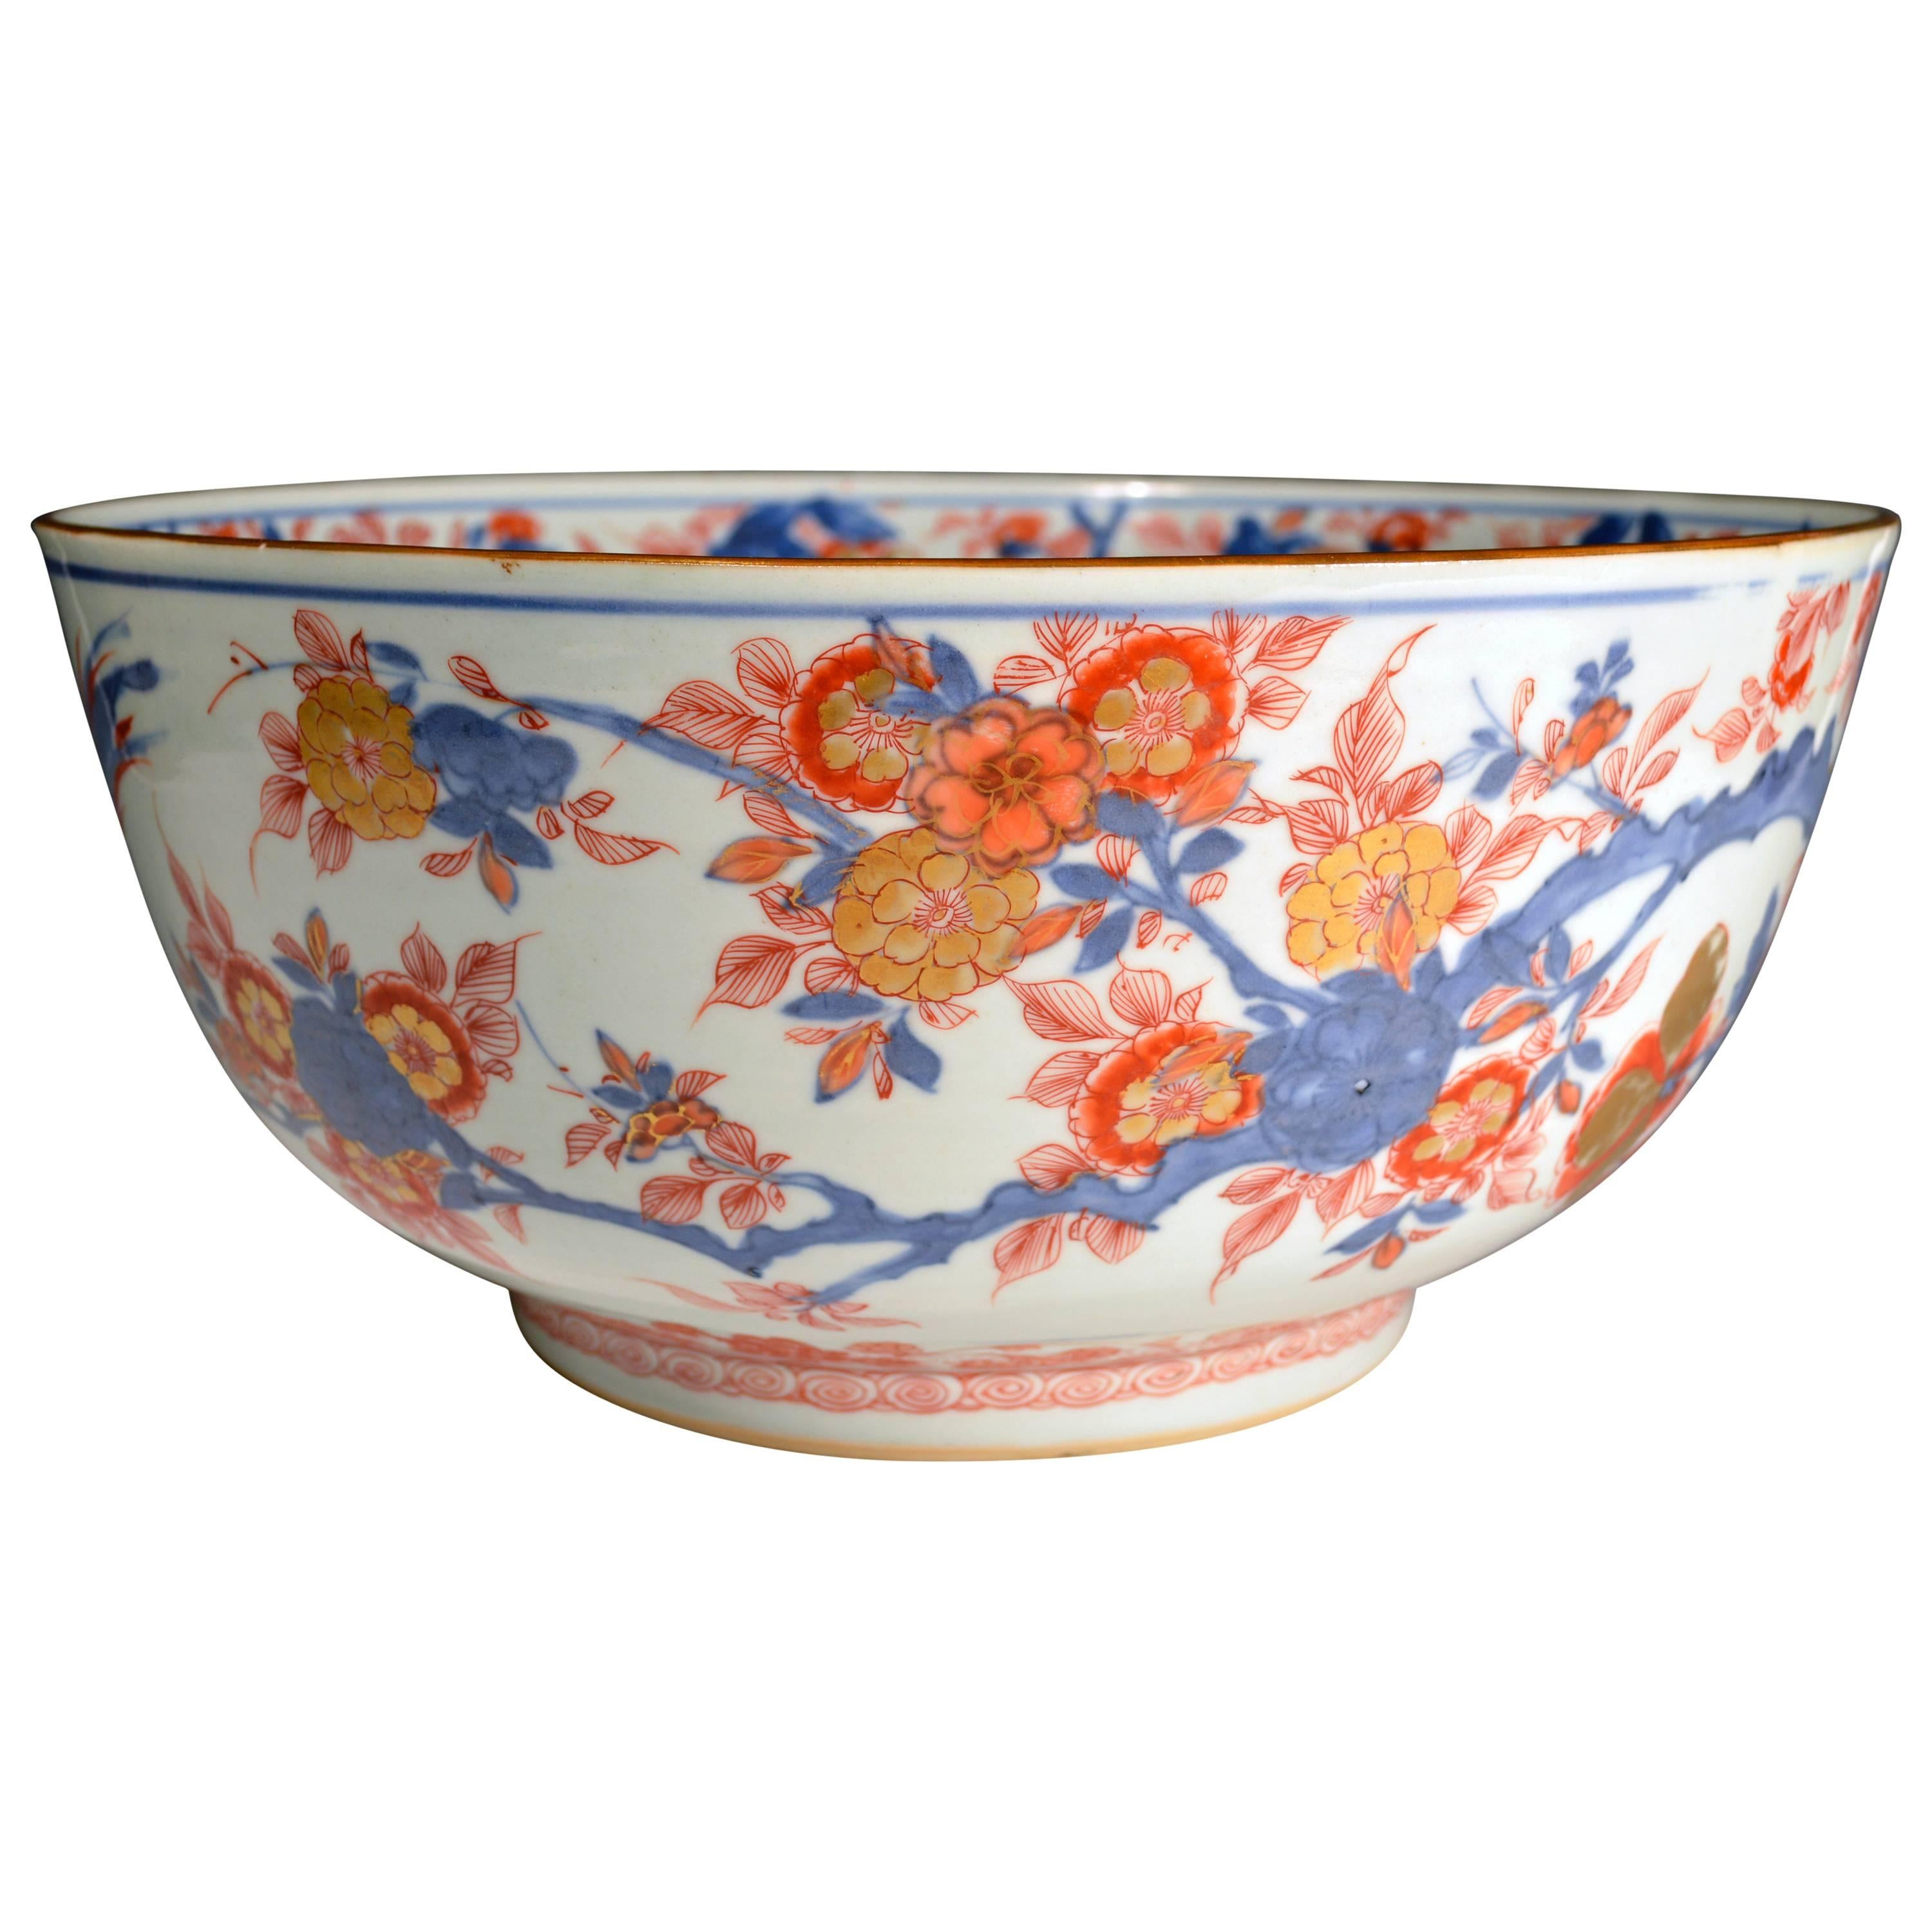 Chinese Export Imari Porcelain Punch Bowl.